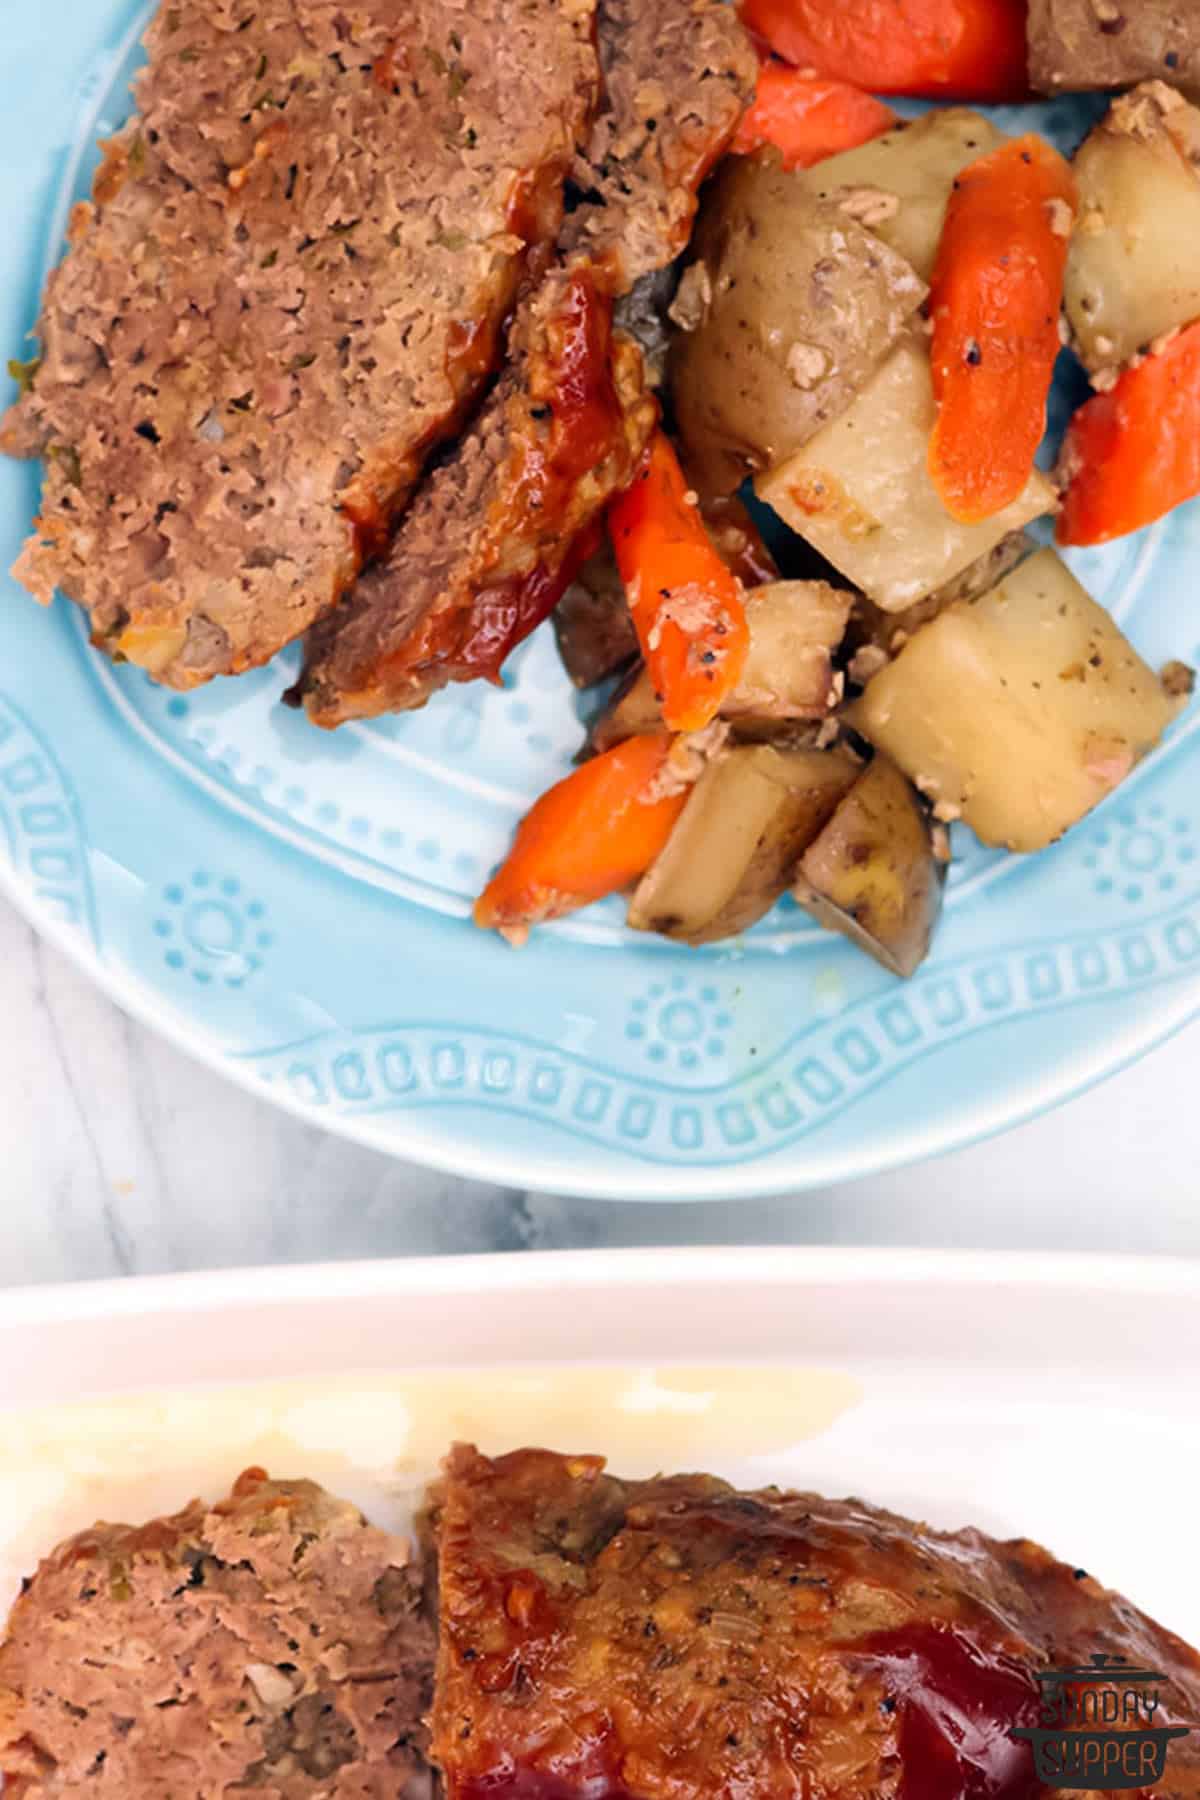 a plate of sliced meatloaf and vegetables next to a serving platter of meatloaf